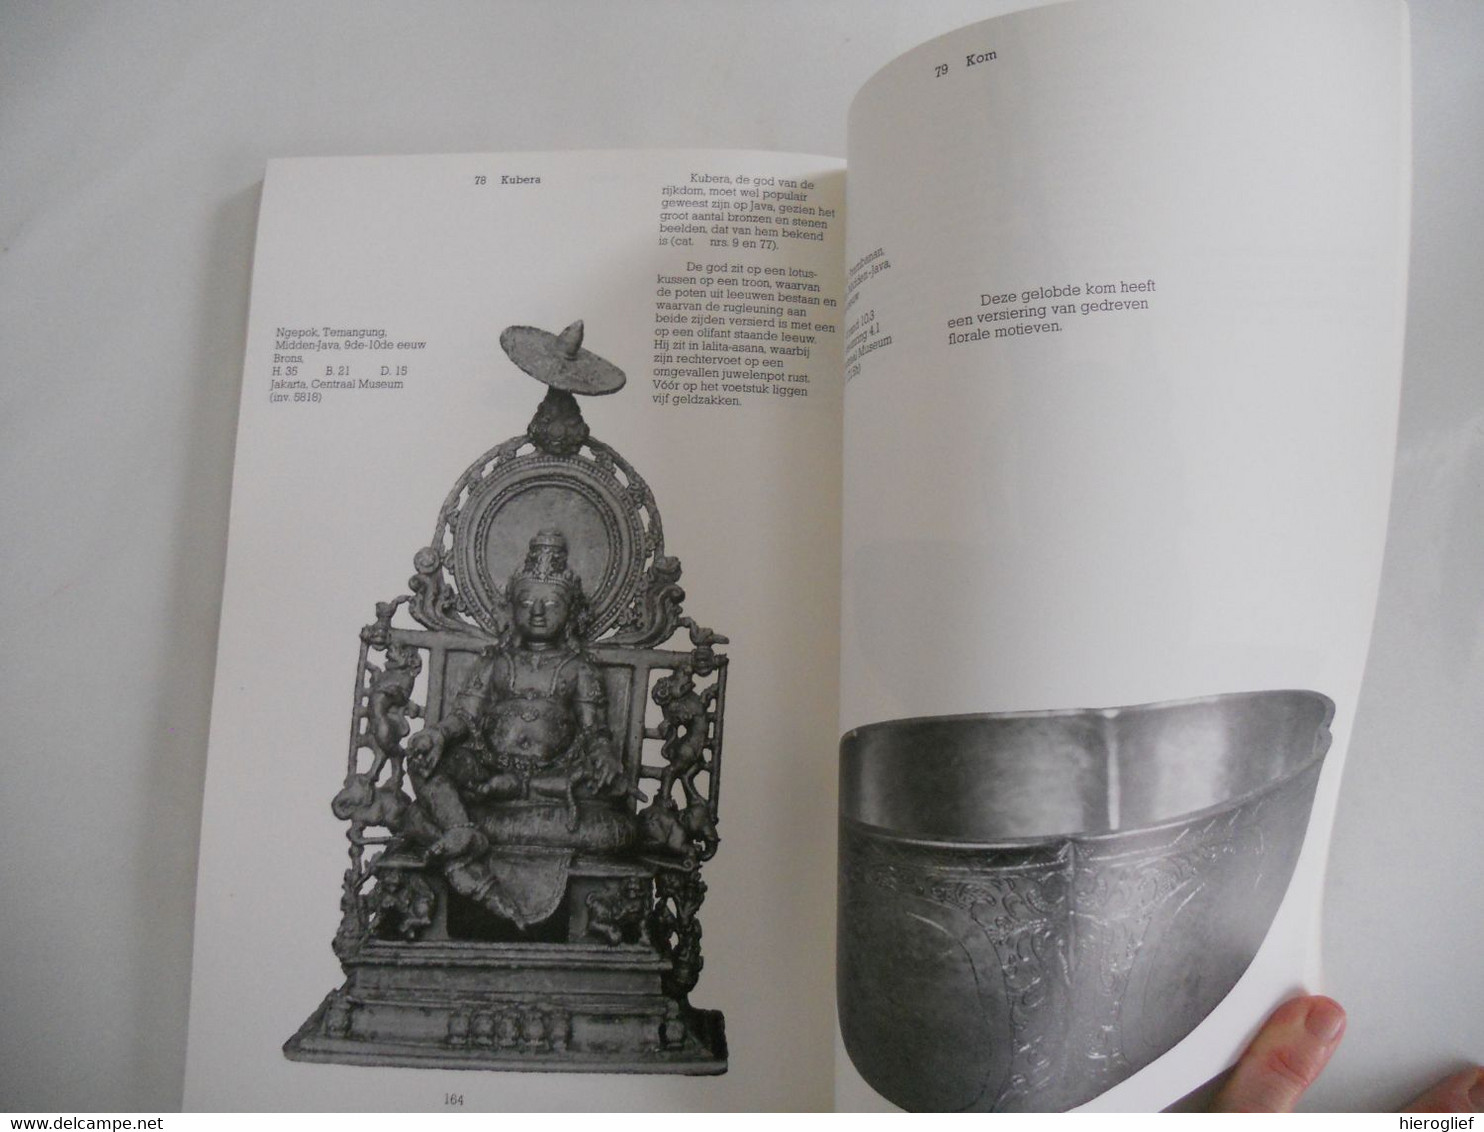 BOROBUDUR Brussel 1977 cultureel akkoord België Indonesië catalogus tentoonstelling paleis schone kunsten java tempel